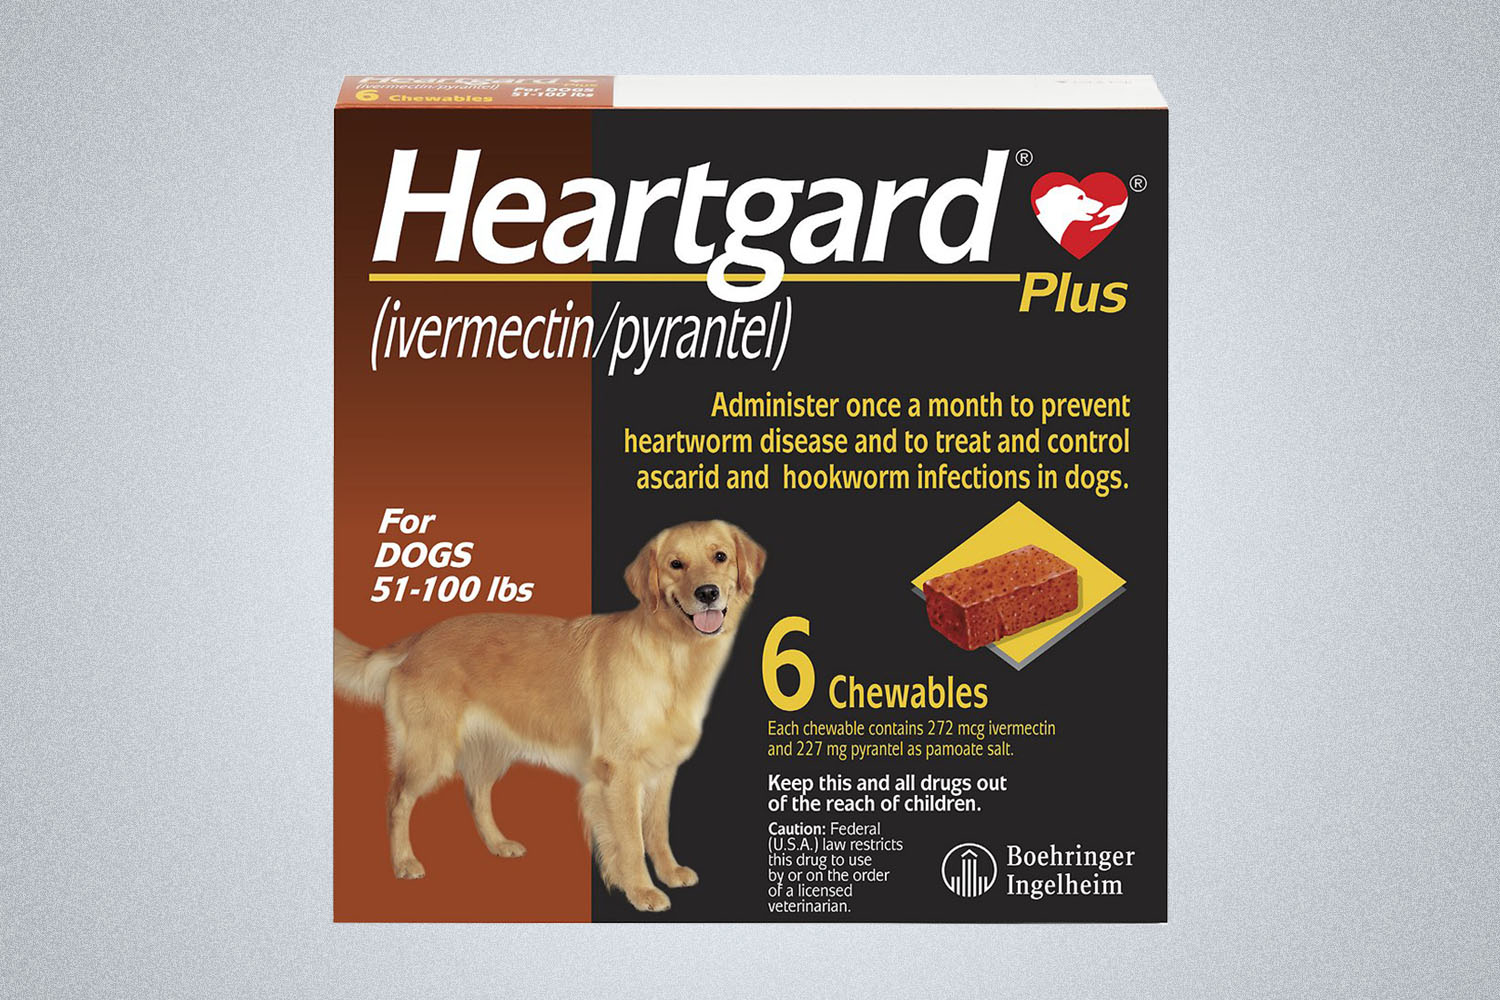 a box of Heartgard dog medicine on a grey background